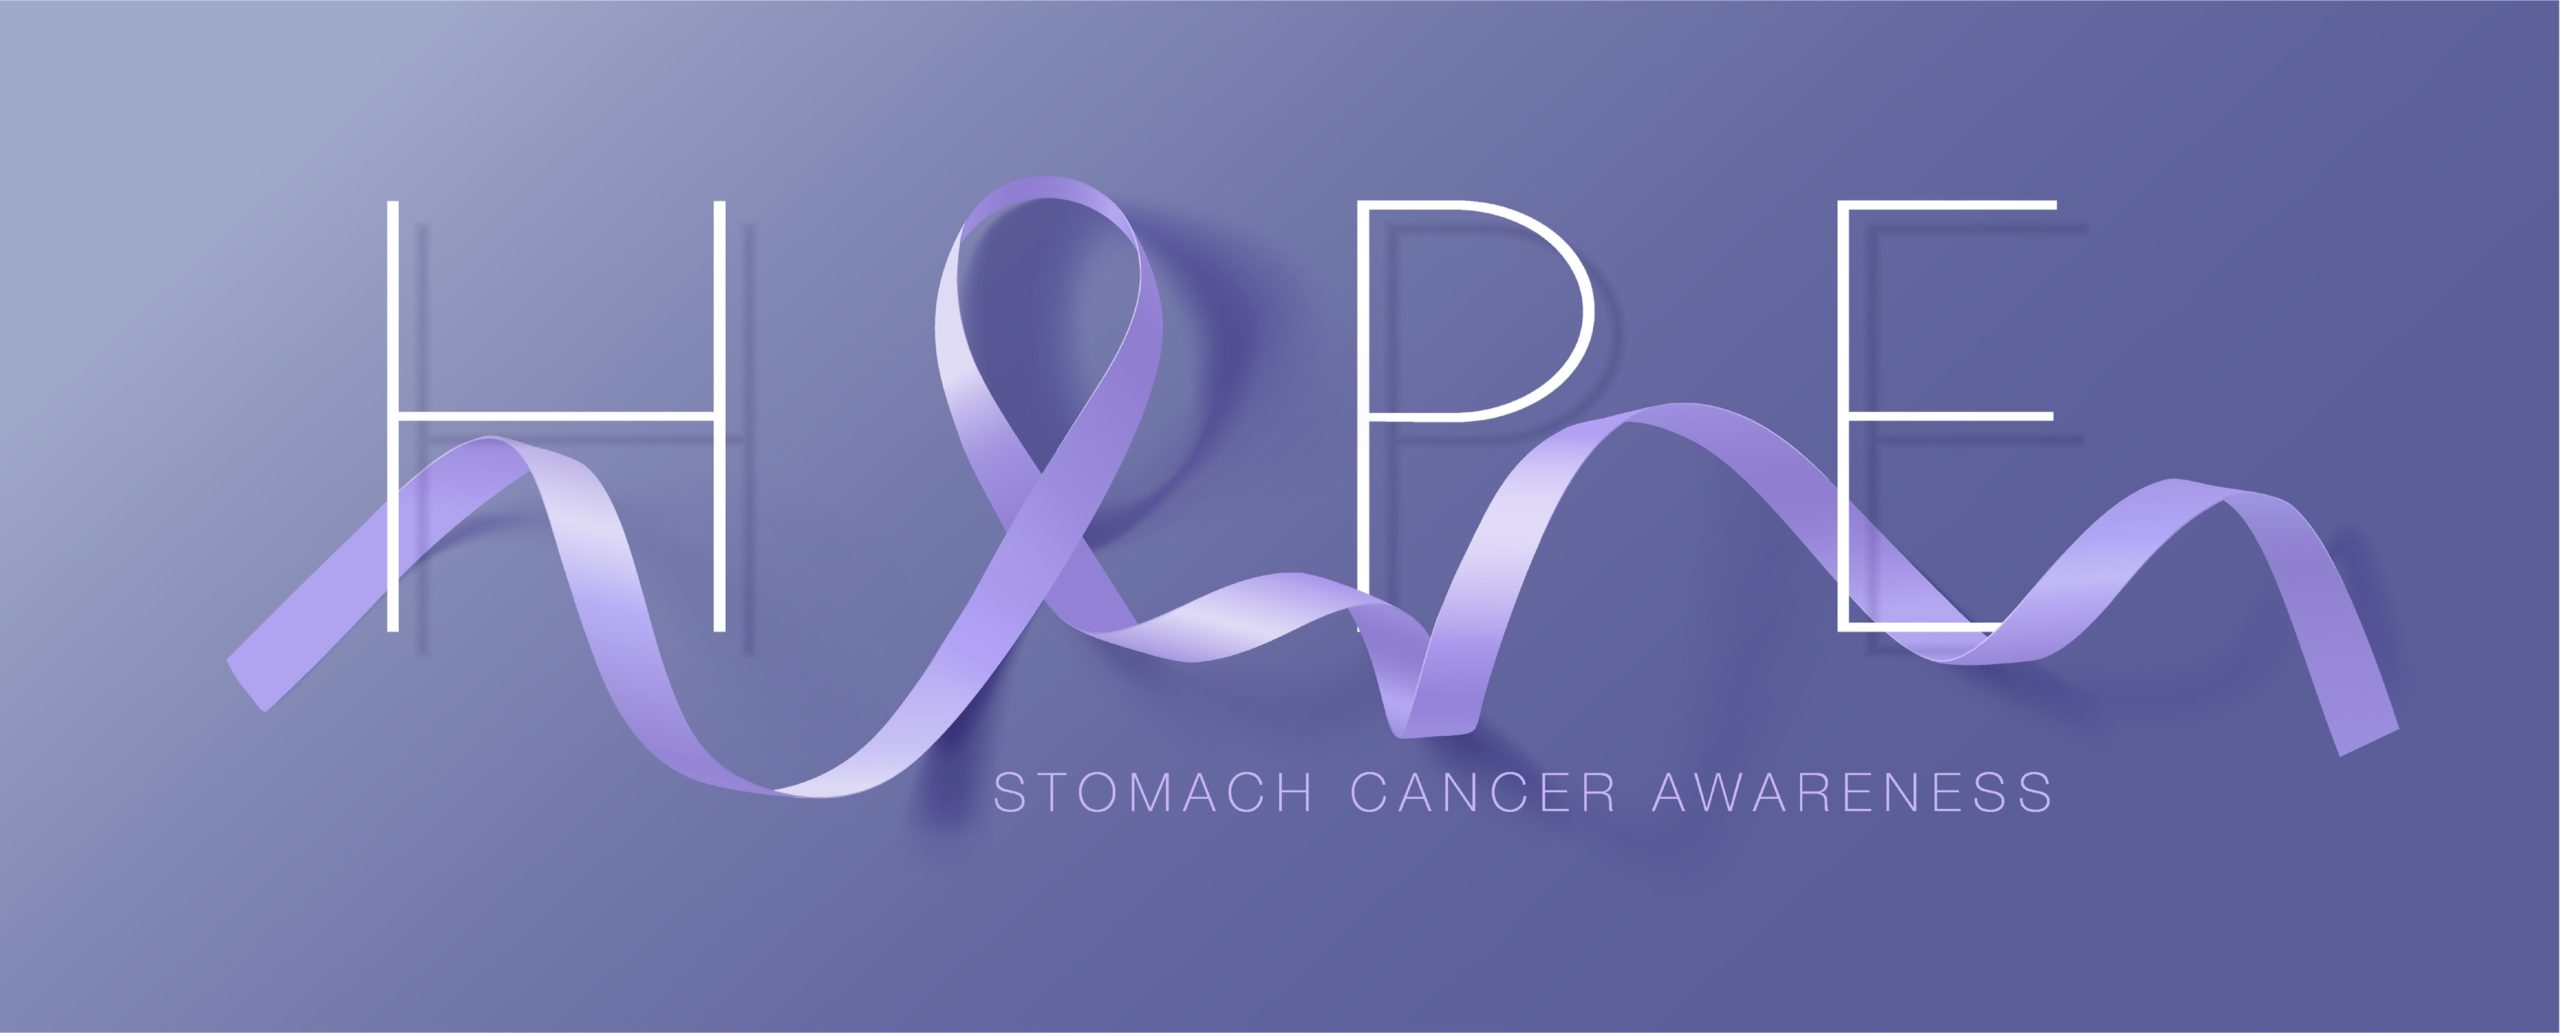 Stomach Cancer Awareness Month – November